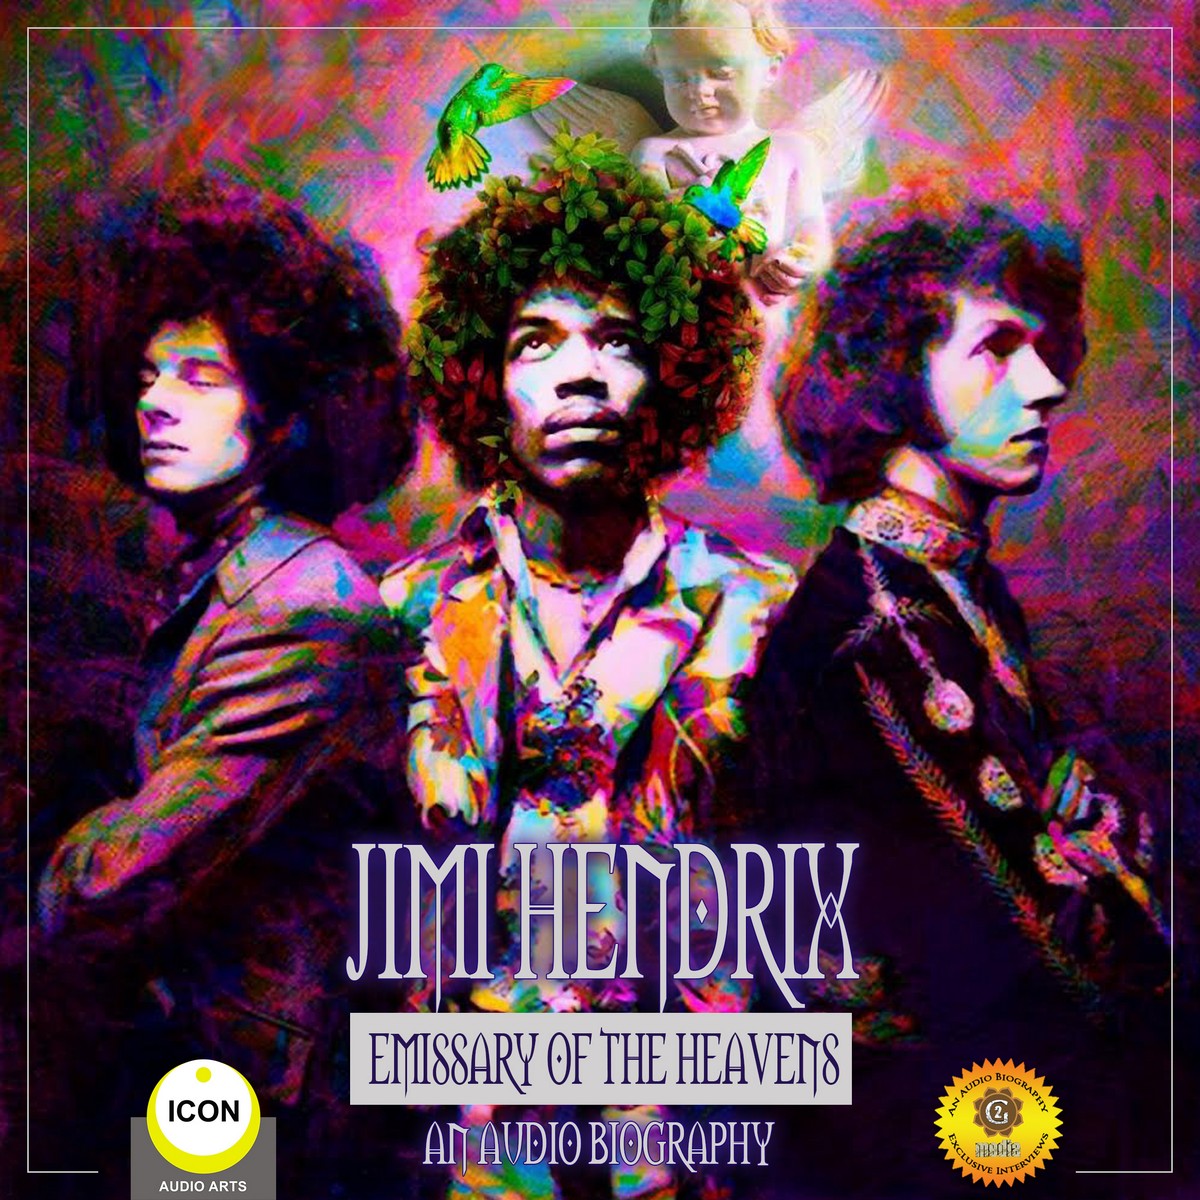 Jimi Hendrix Emissary of the Heavens – An Audio Biography